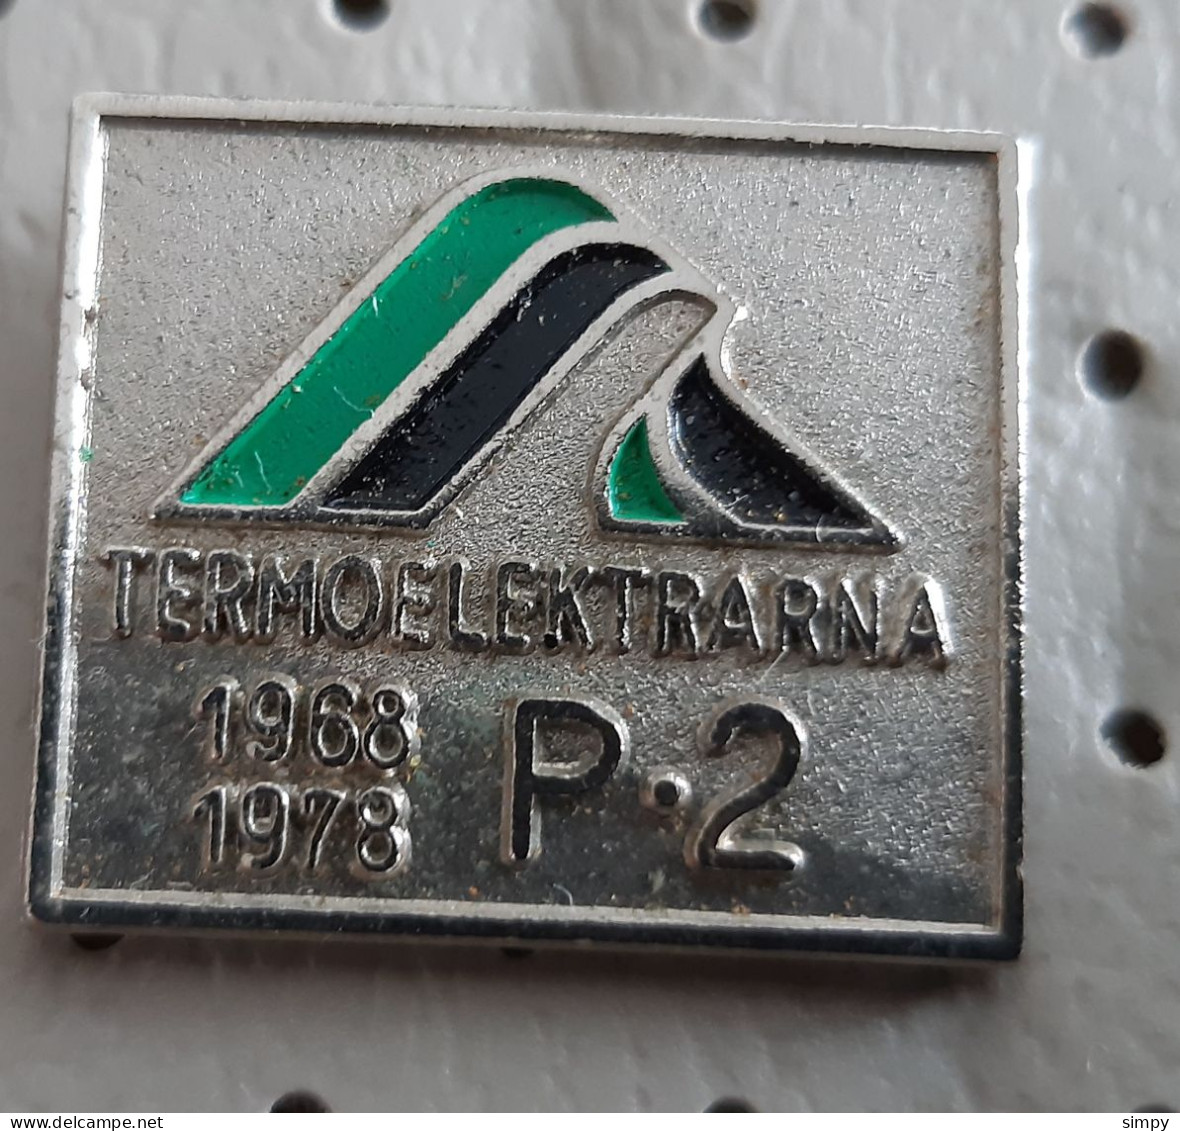 TE Trbovlje P2 1968/1978 Termal Power Plant Slovenia Ex Yugoslavia  Pin - Trademarks